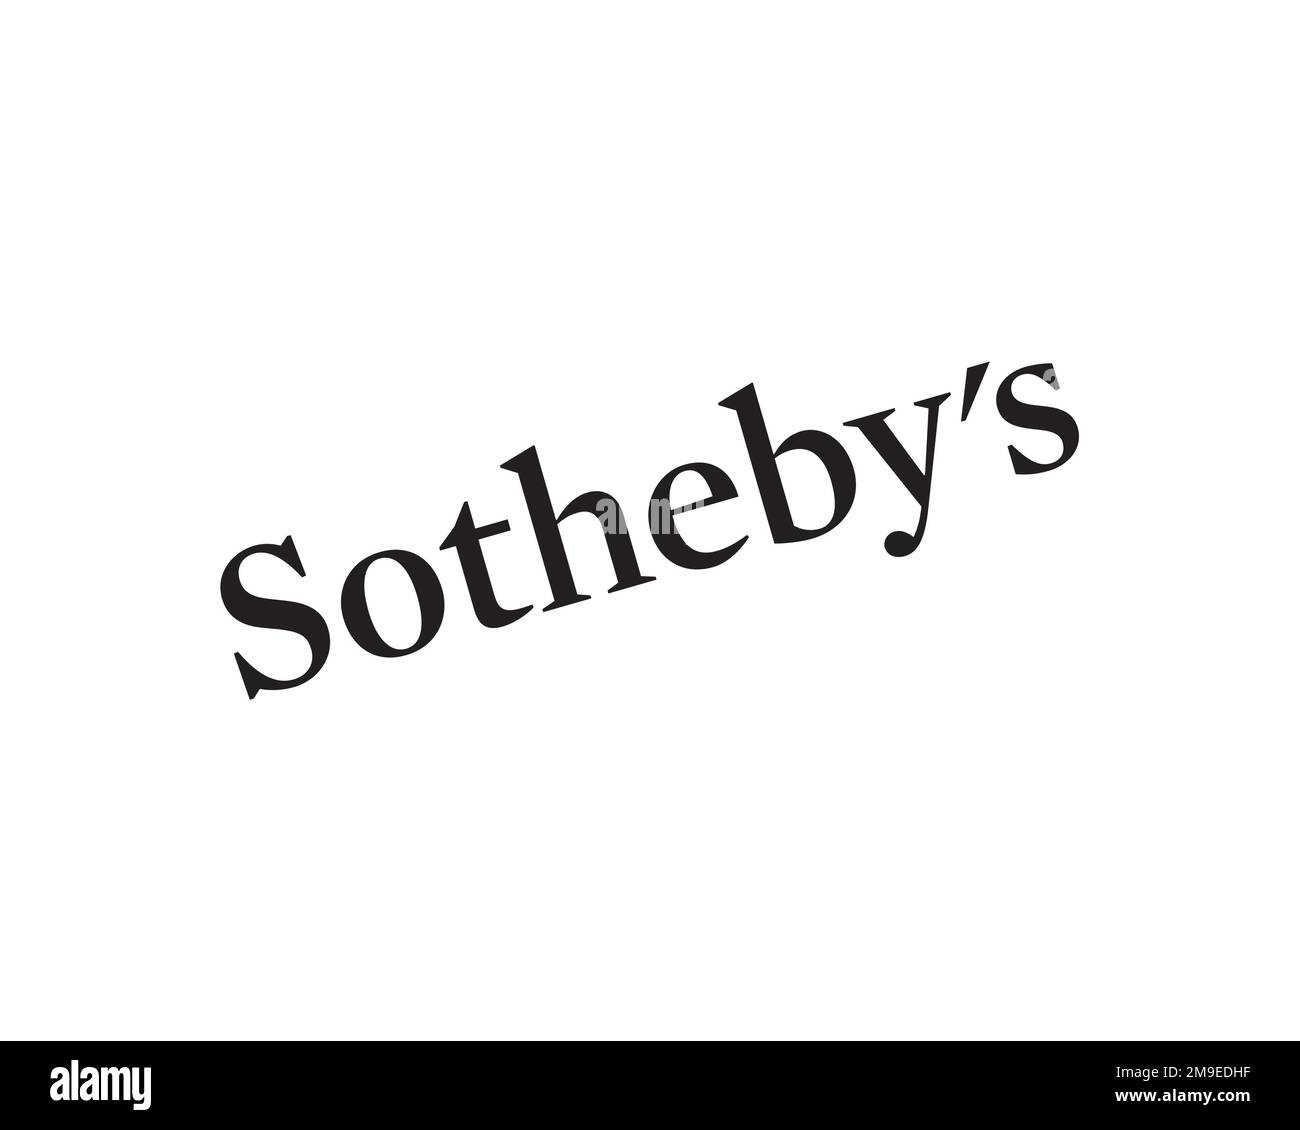 Sothebys auction house sothebys Cut Out Stock Images & Pictures - Alamy